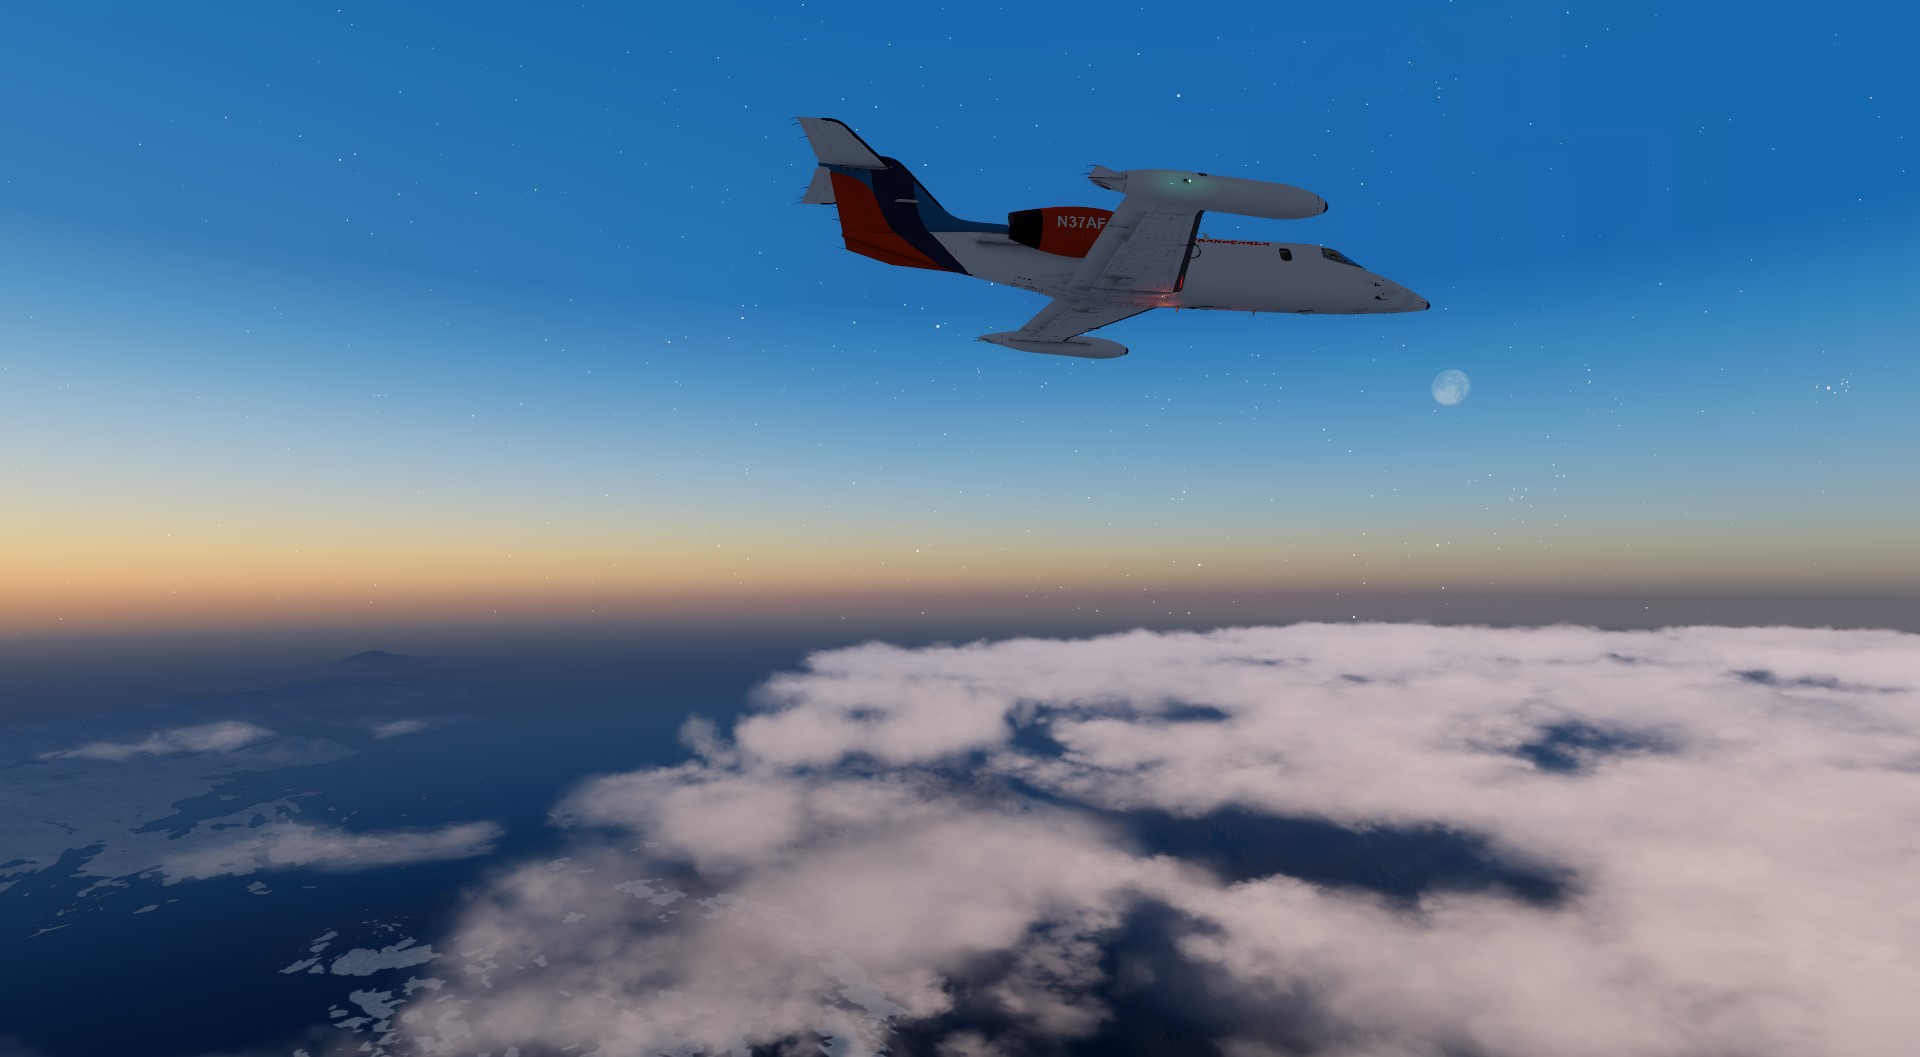 Flysimware – Learjet 35A 评测与冰岛送货之旅-1394 